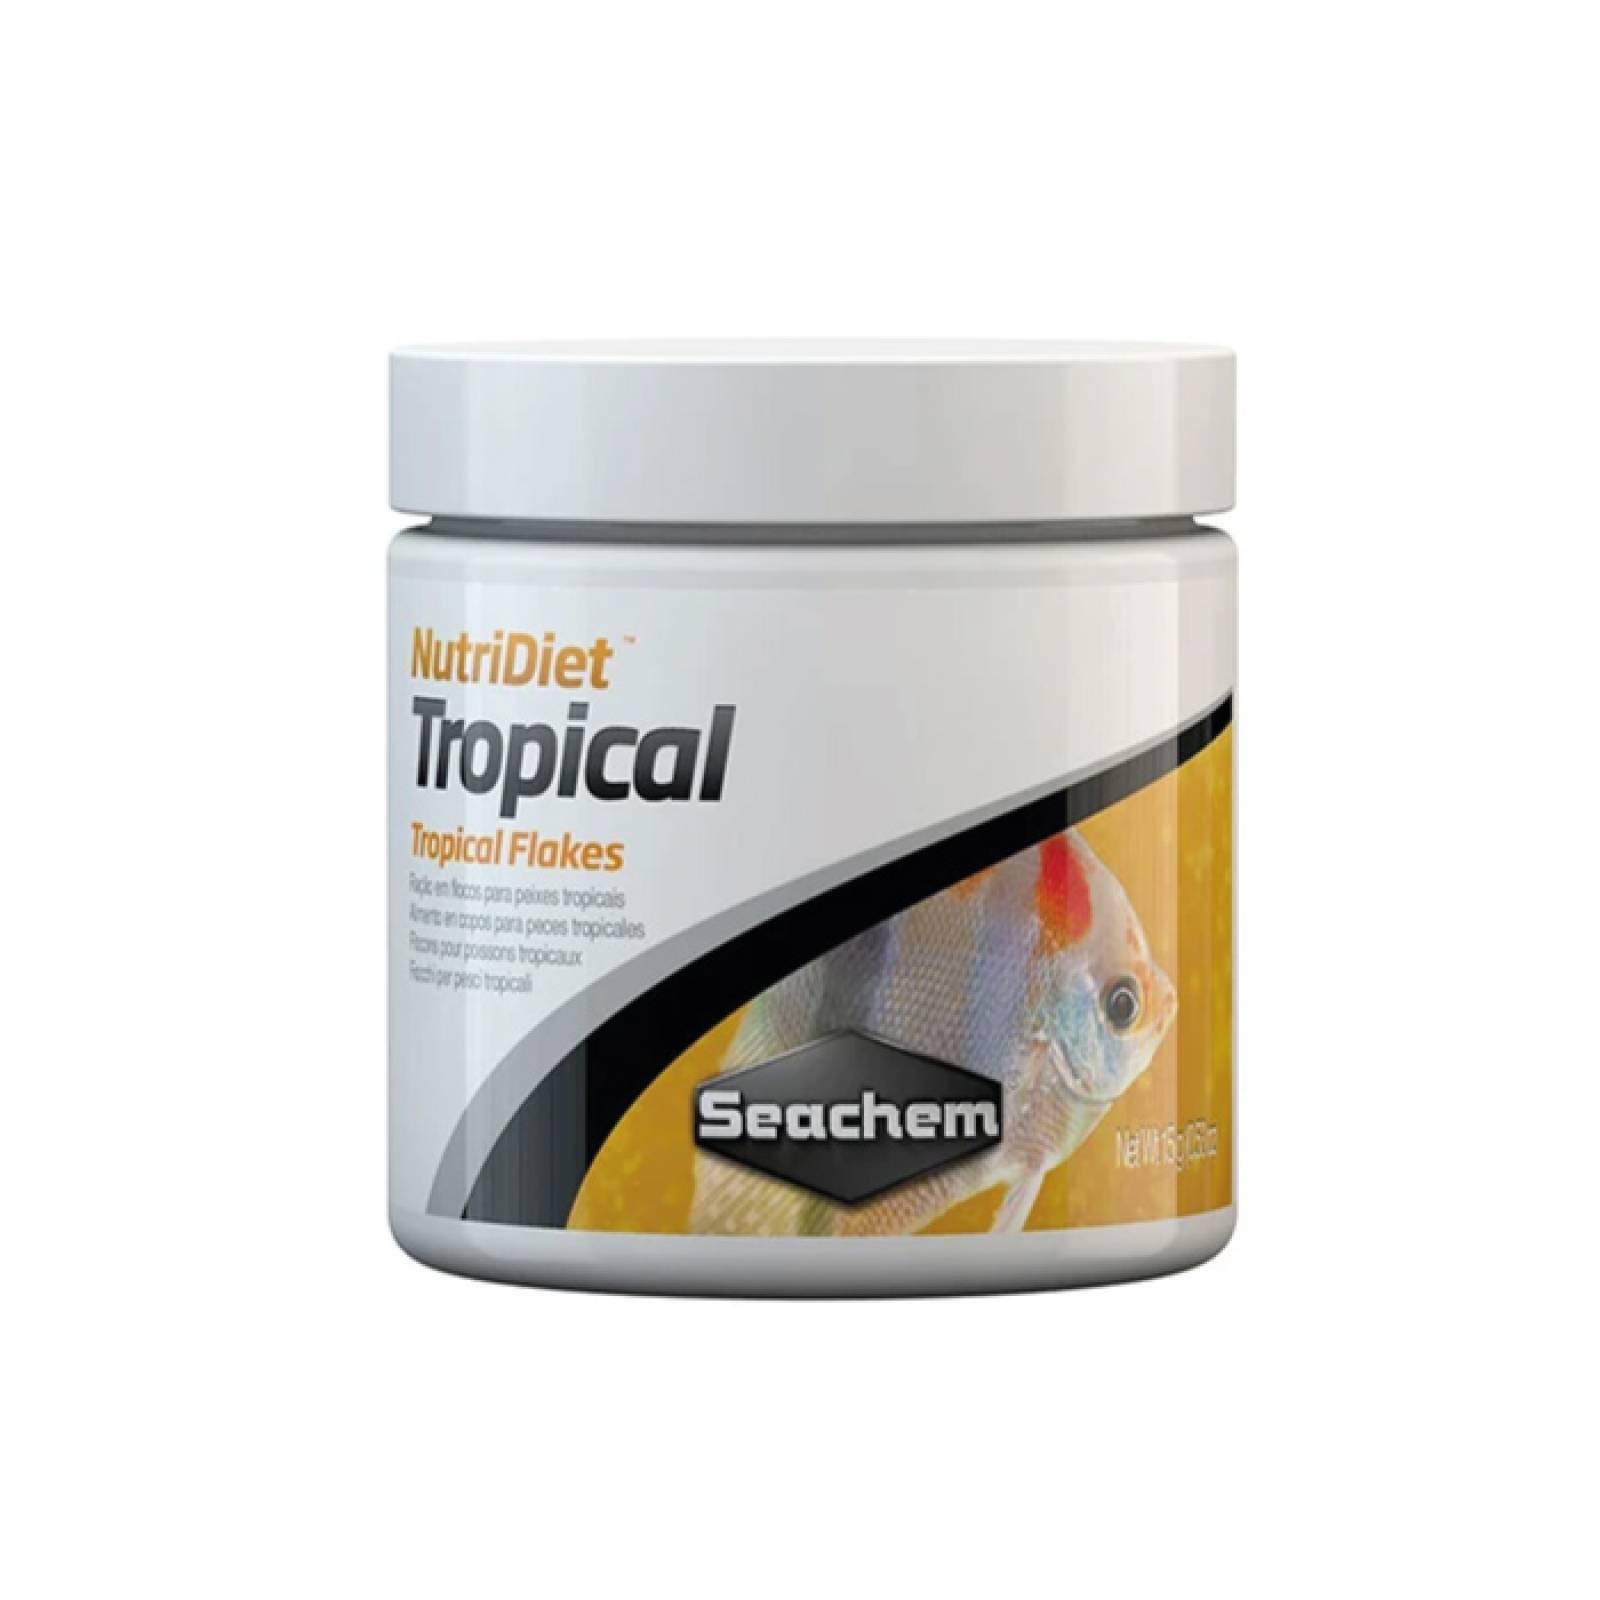 Seachem Nutridiet Tropical Flakes Con Probióticos 100 gramos